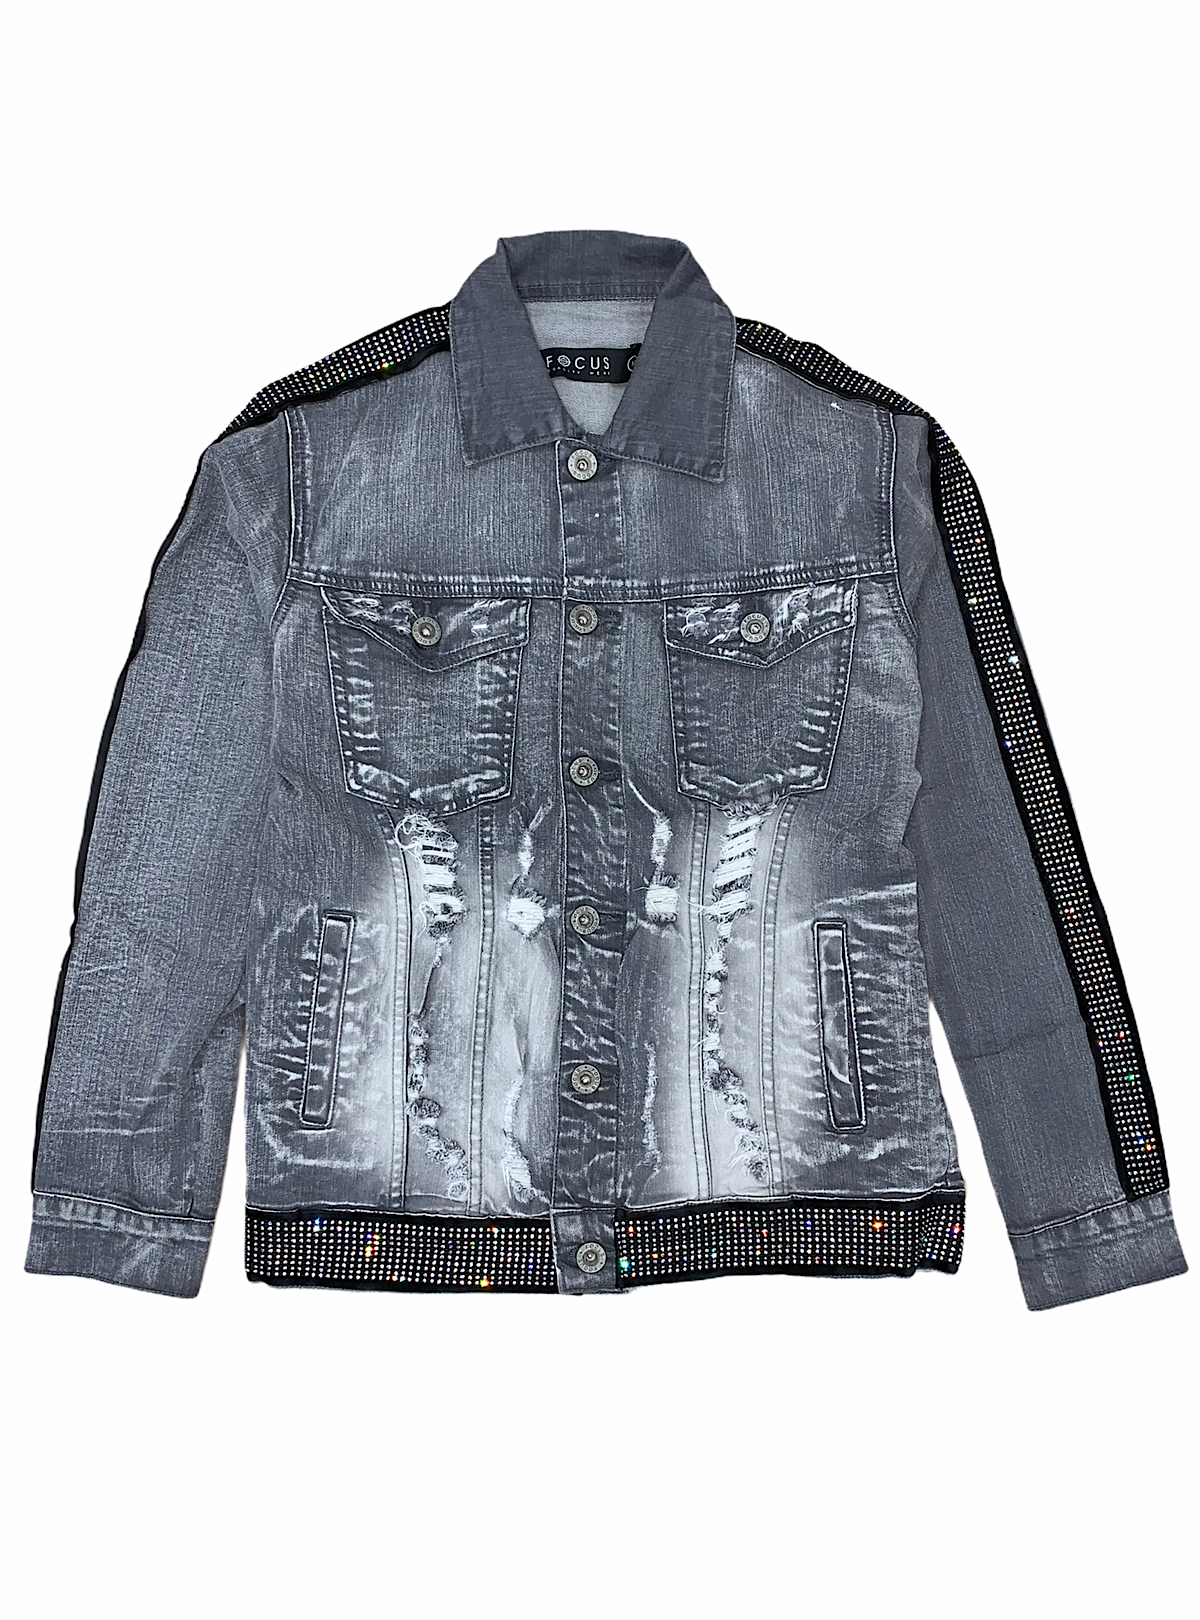 Focus Jeans-Studded Stripped Denim Jacket-Grey-3209-j